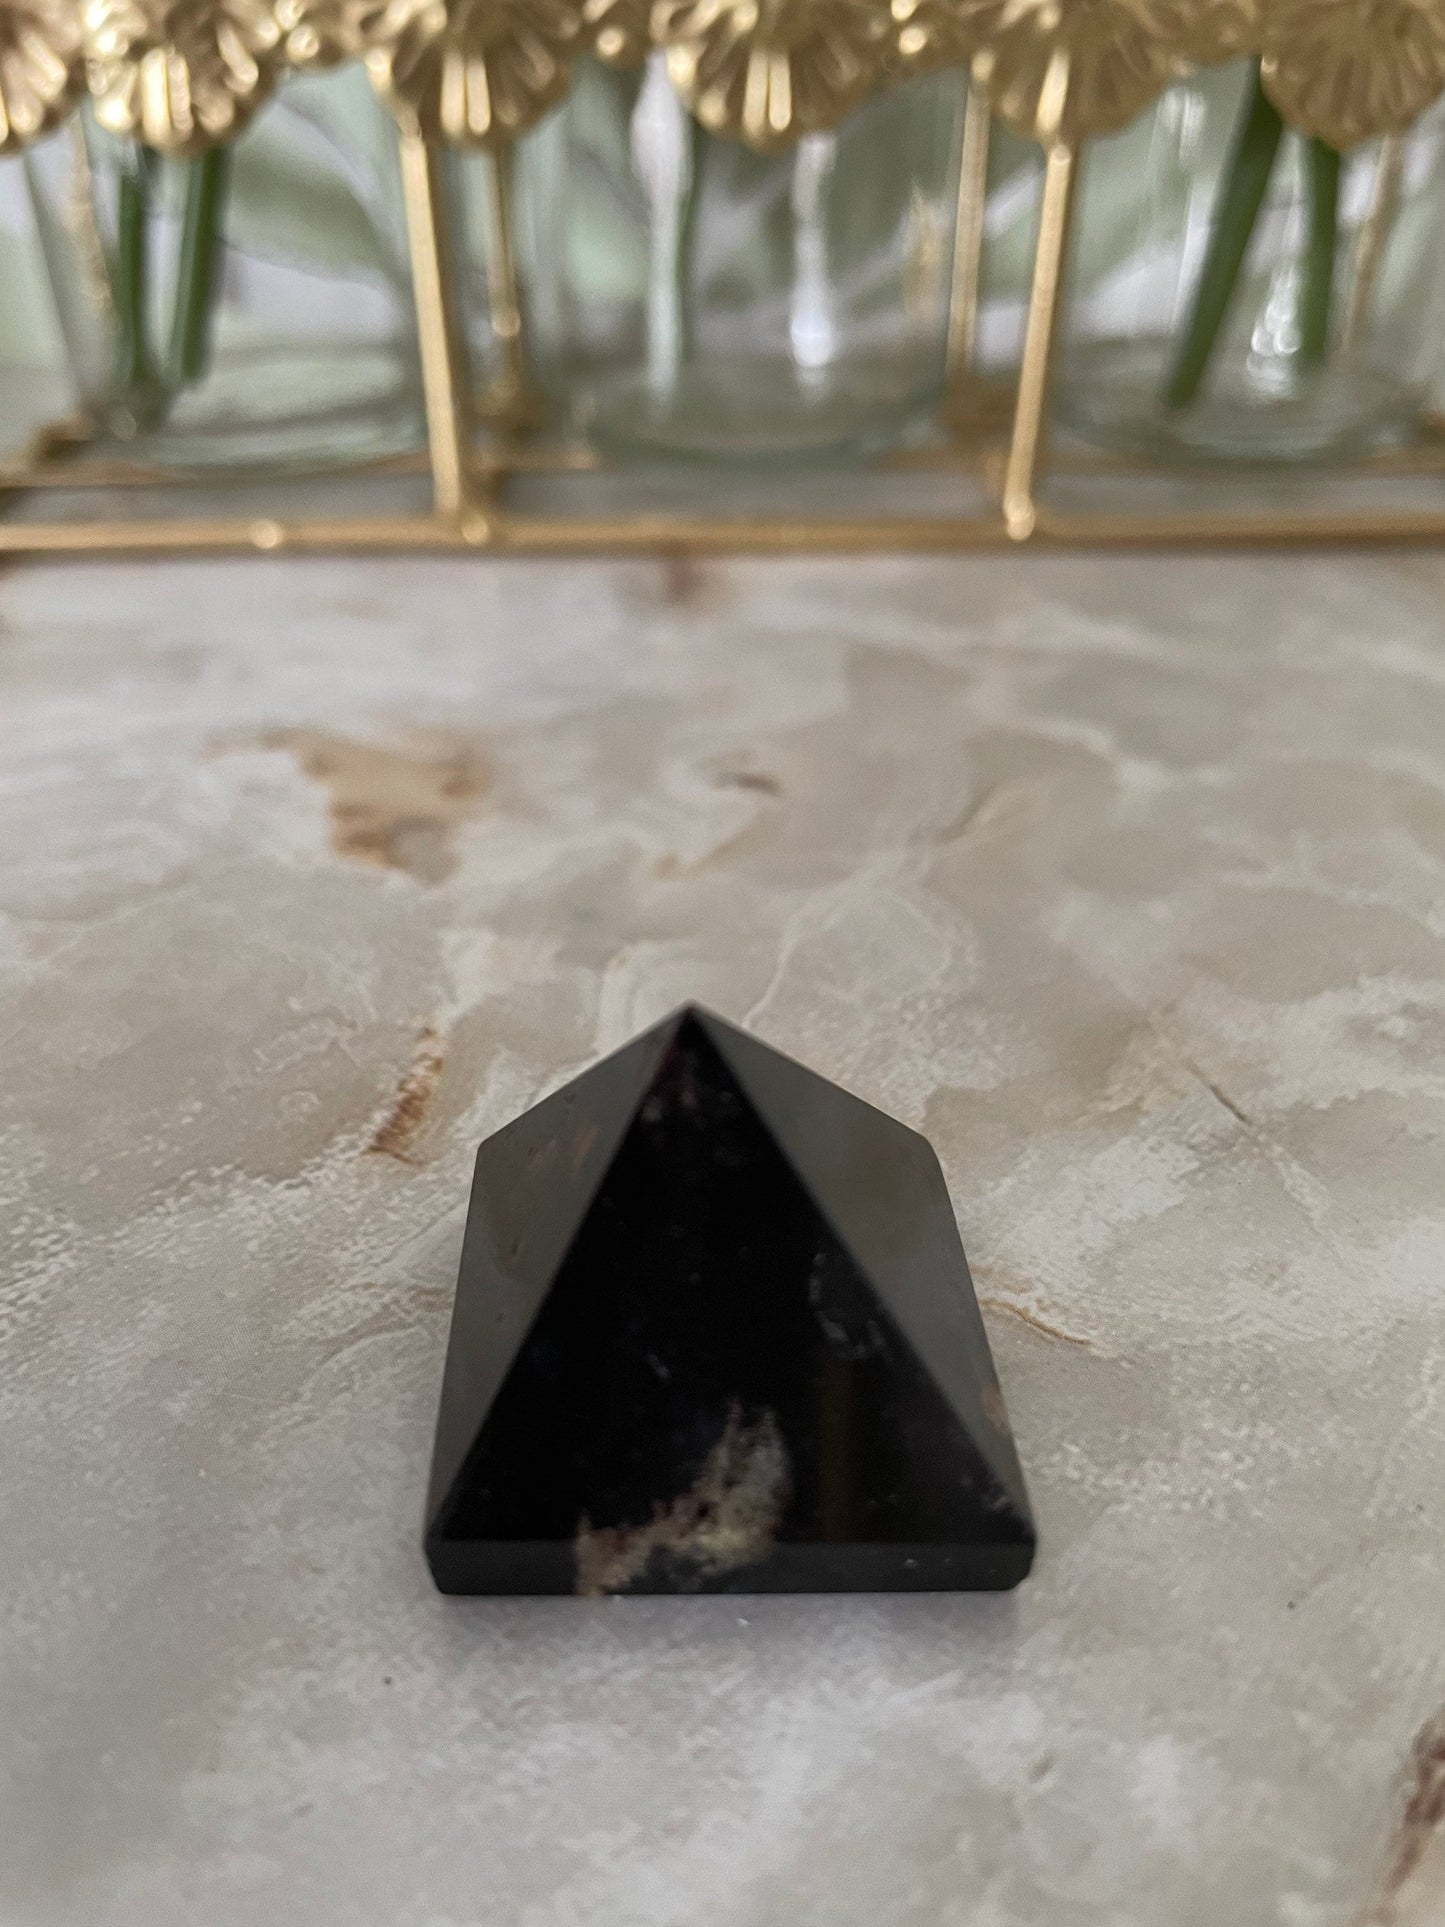 Gemstone Pyramid - Black Sardonyx Absorbs negativity energy and bad influences